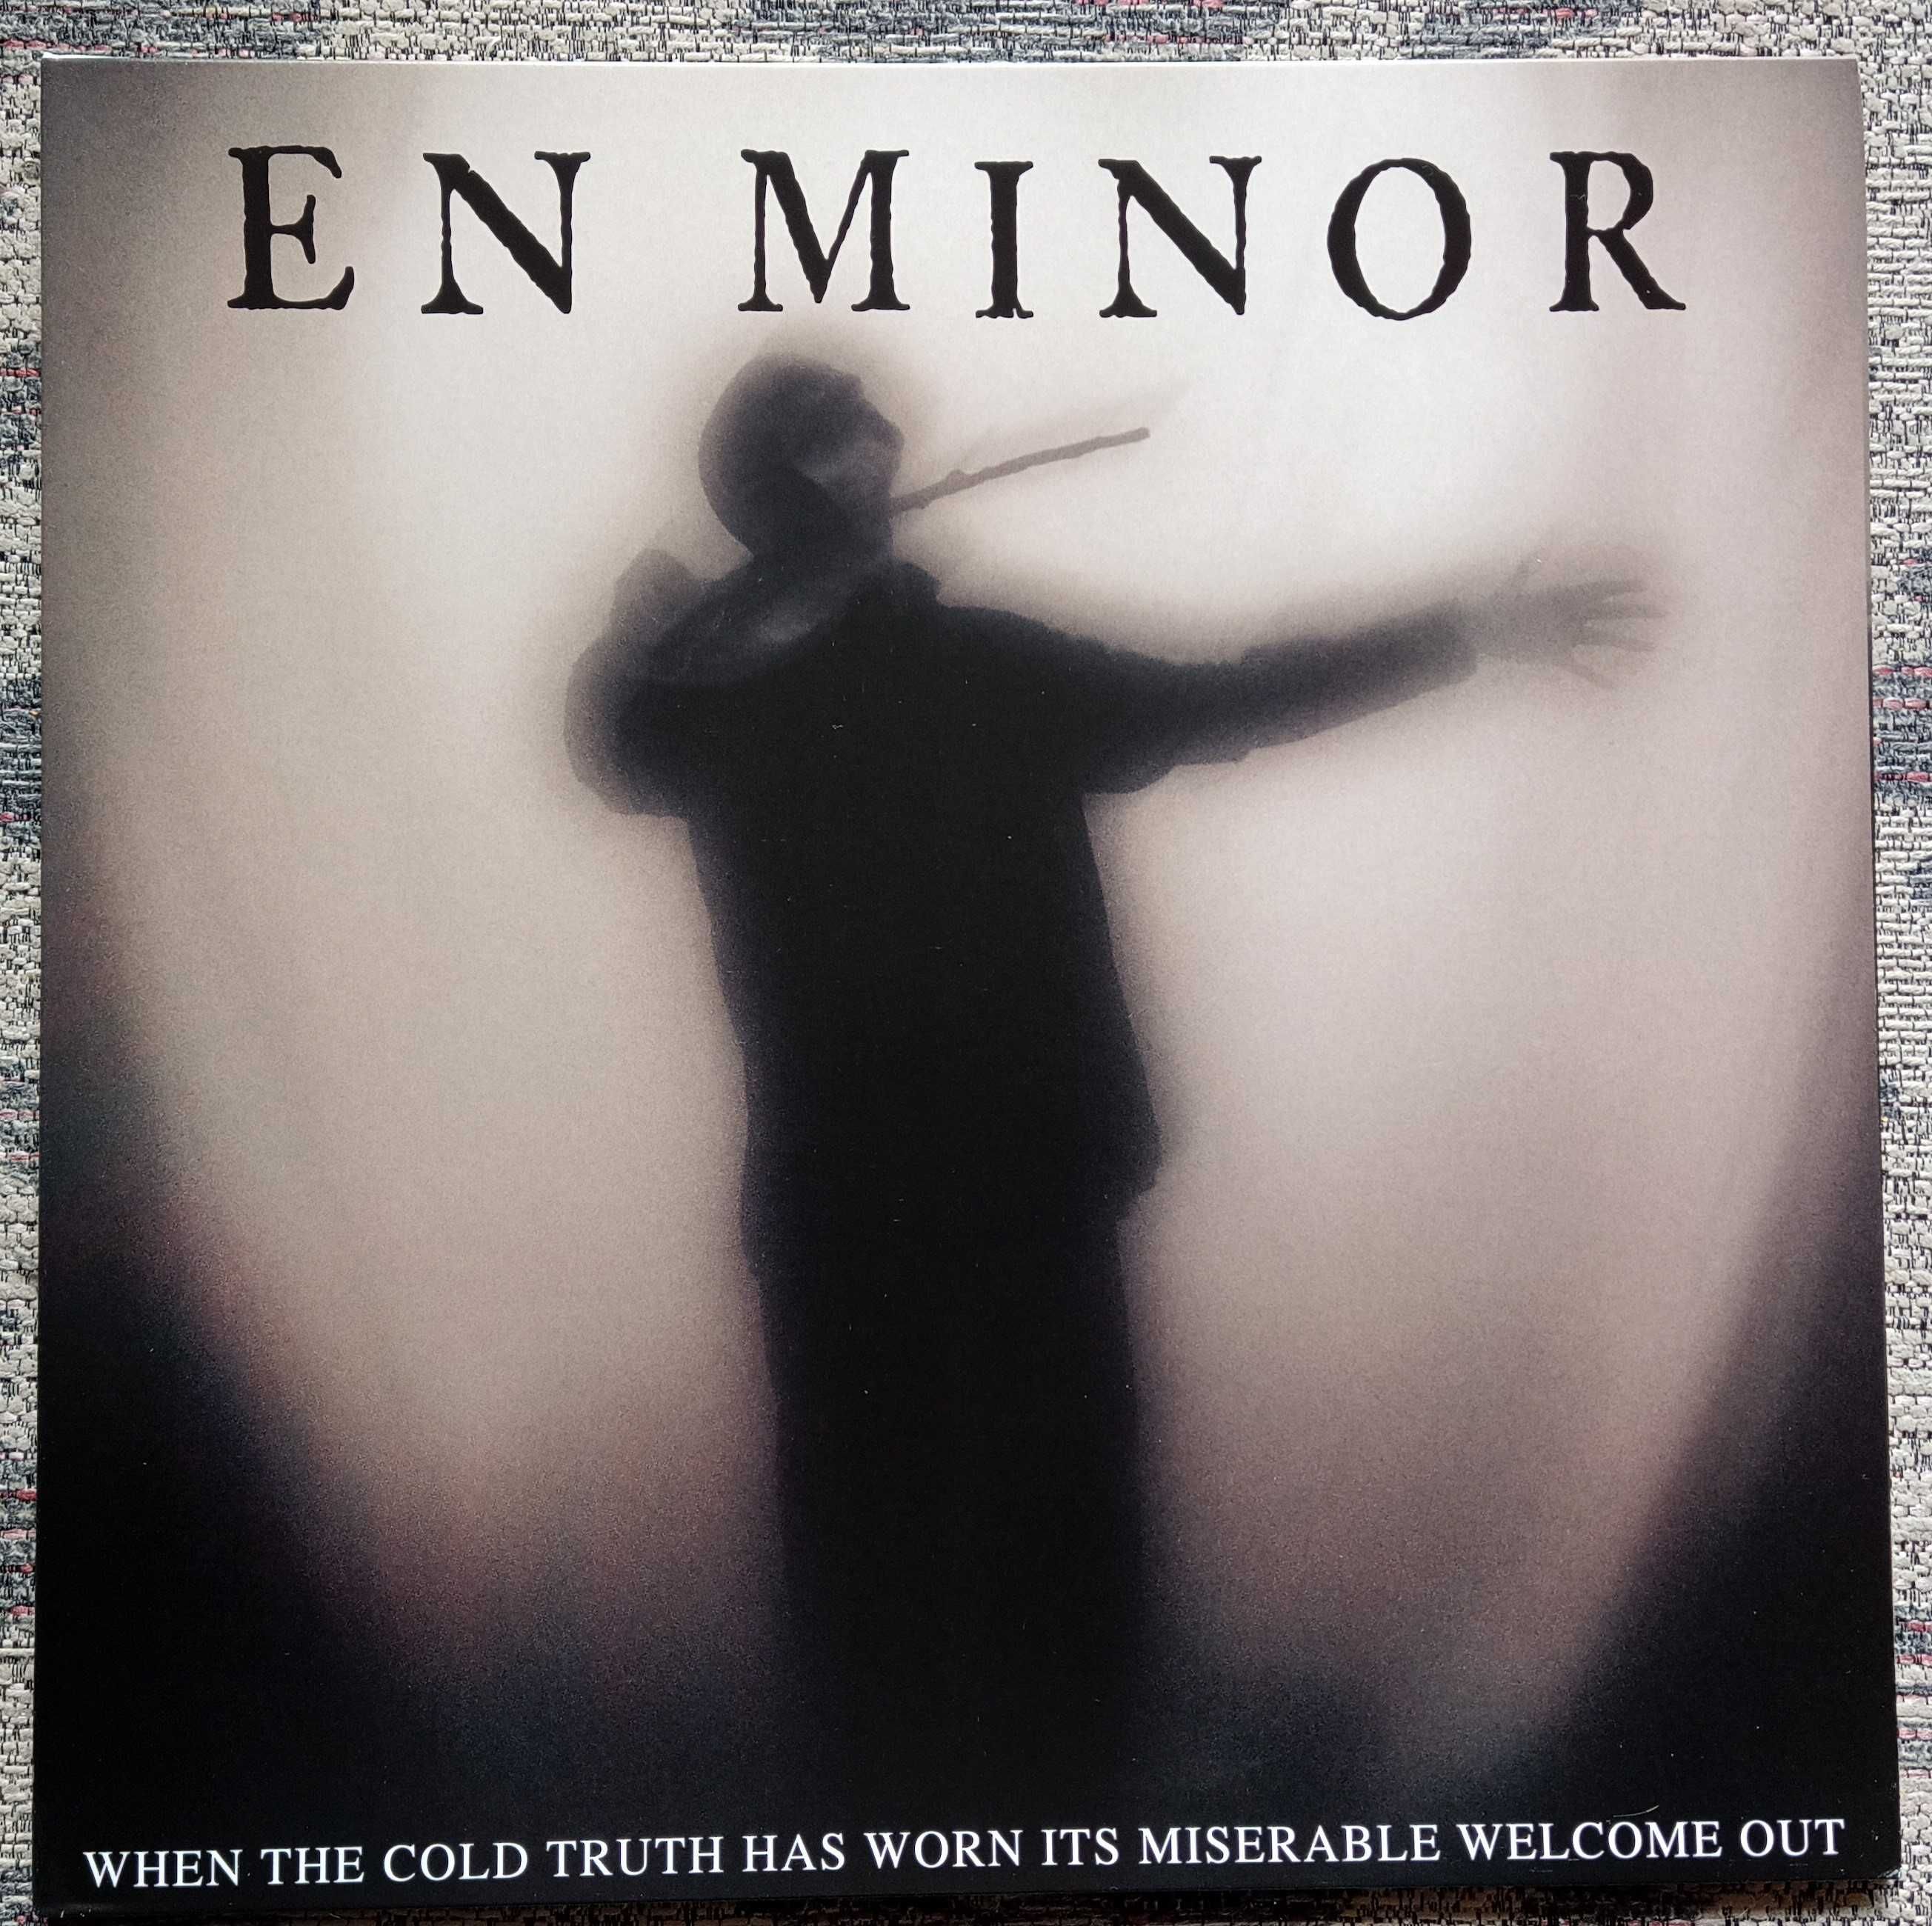 EL MINOR (Phil Anselmo) - "When The Cold Truth..." clear LP